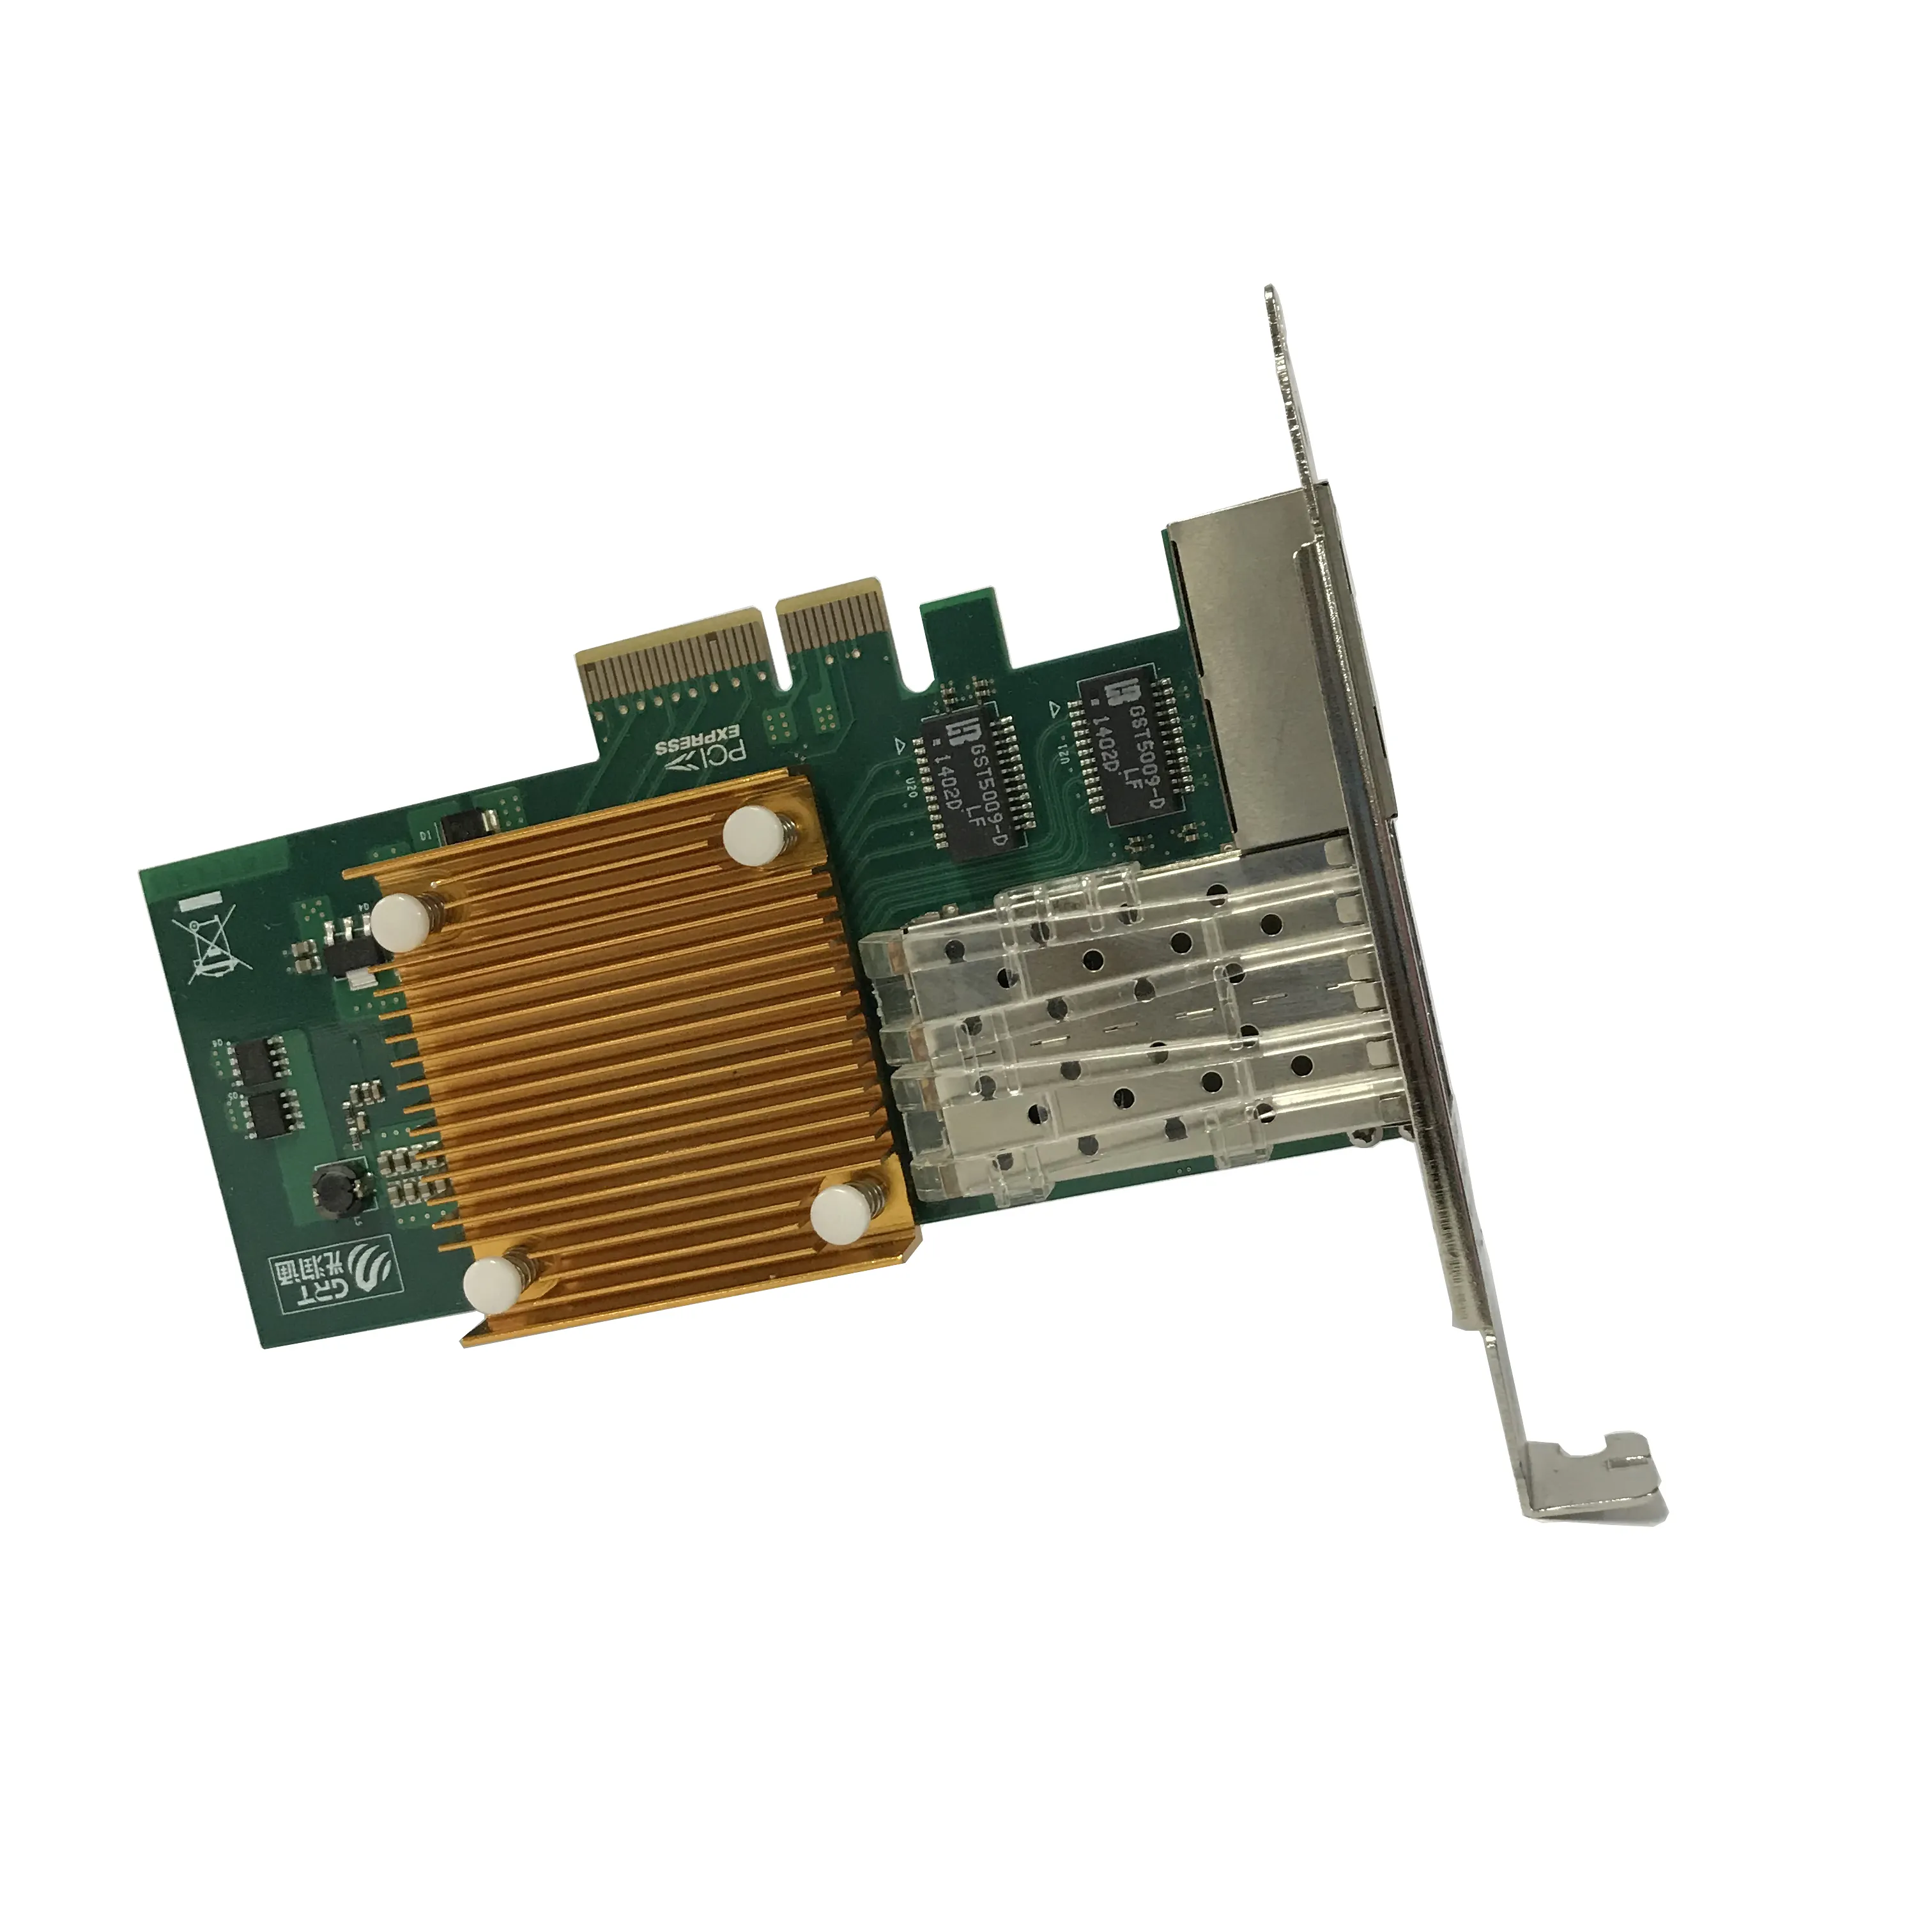 4 Ports RJ45 Fiber port 10/100/1000Mbps Gigabit LAN PCI-E PCIe X4 Server Ethernet Network Card Adapter with Intel I350 Chips